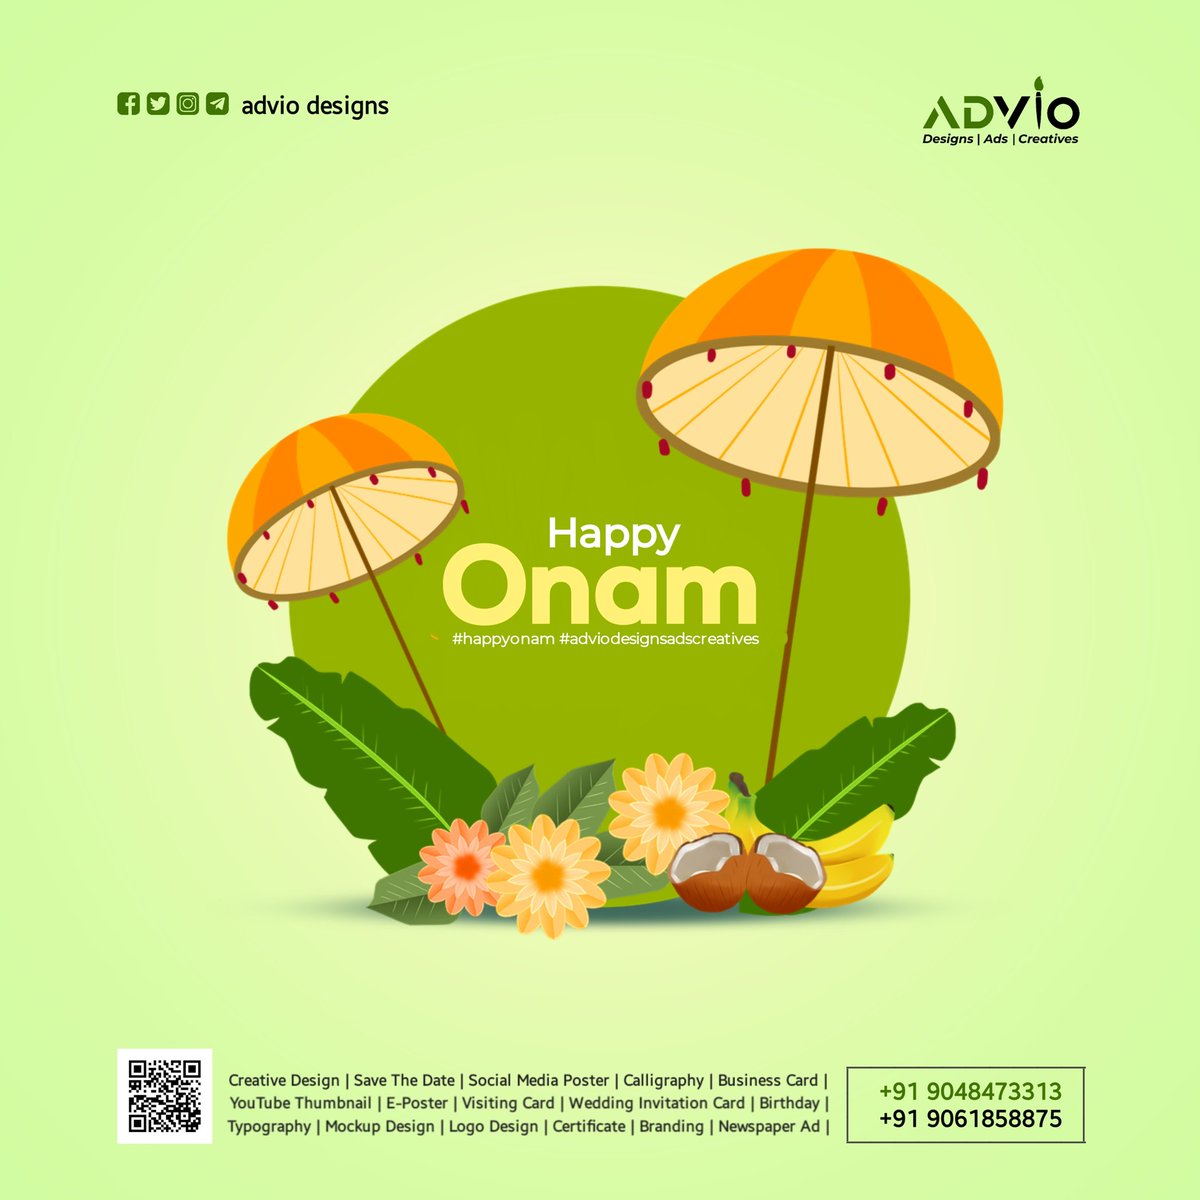 Happy Onam..ഓണാശംസകൾ.....
Advio Designs | Ads | Creatives
#adviodesign #adviodesigns #onam #onam2022 #onashamsakal #onamfestival